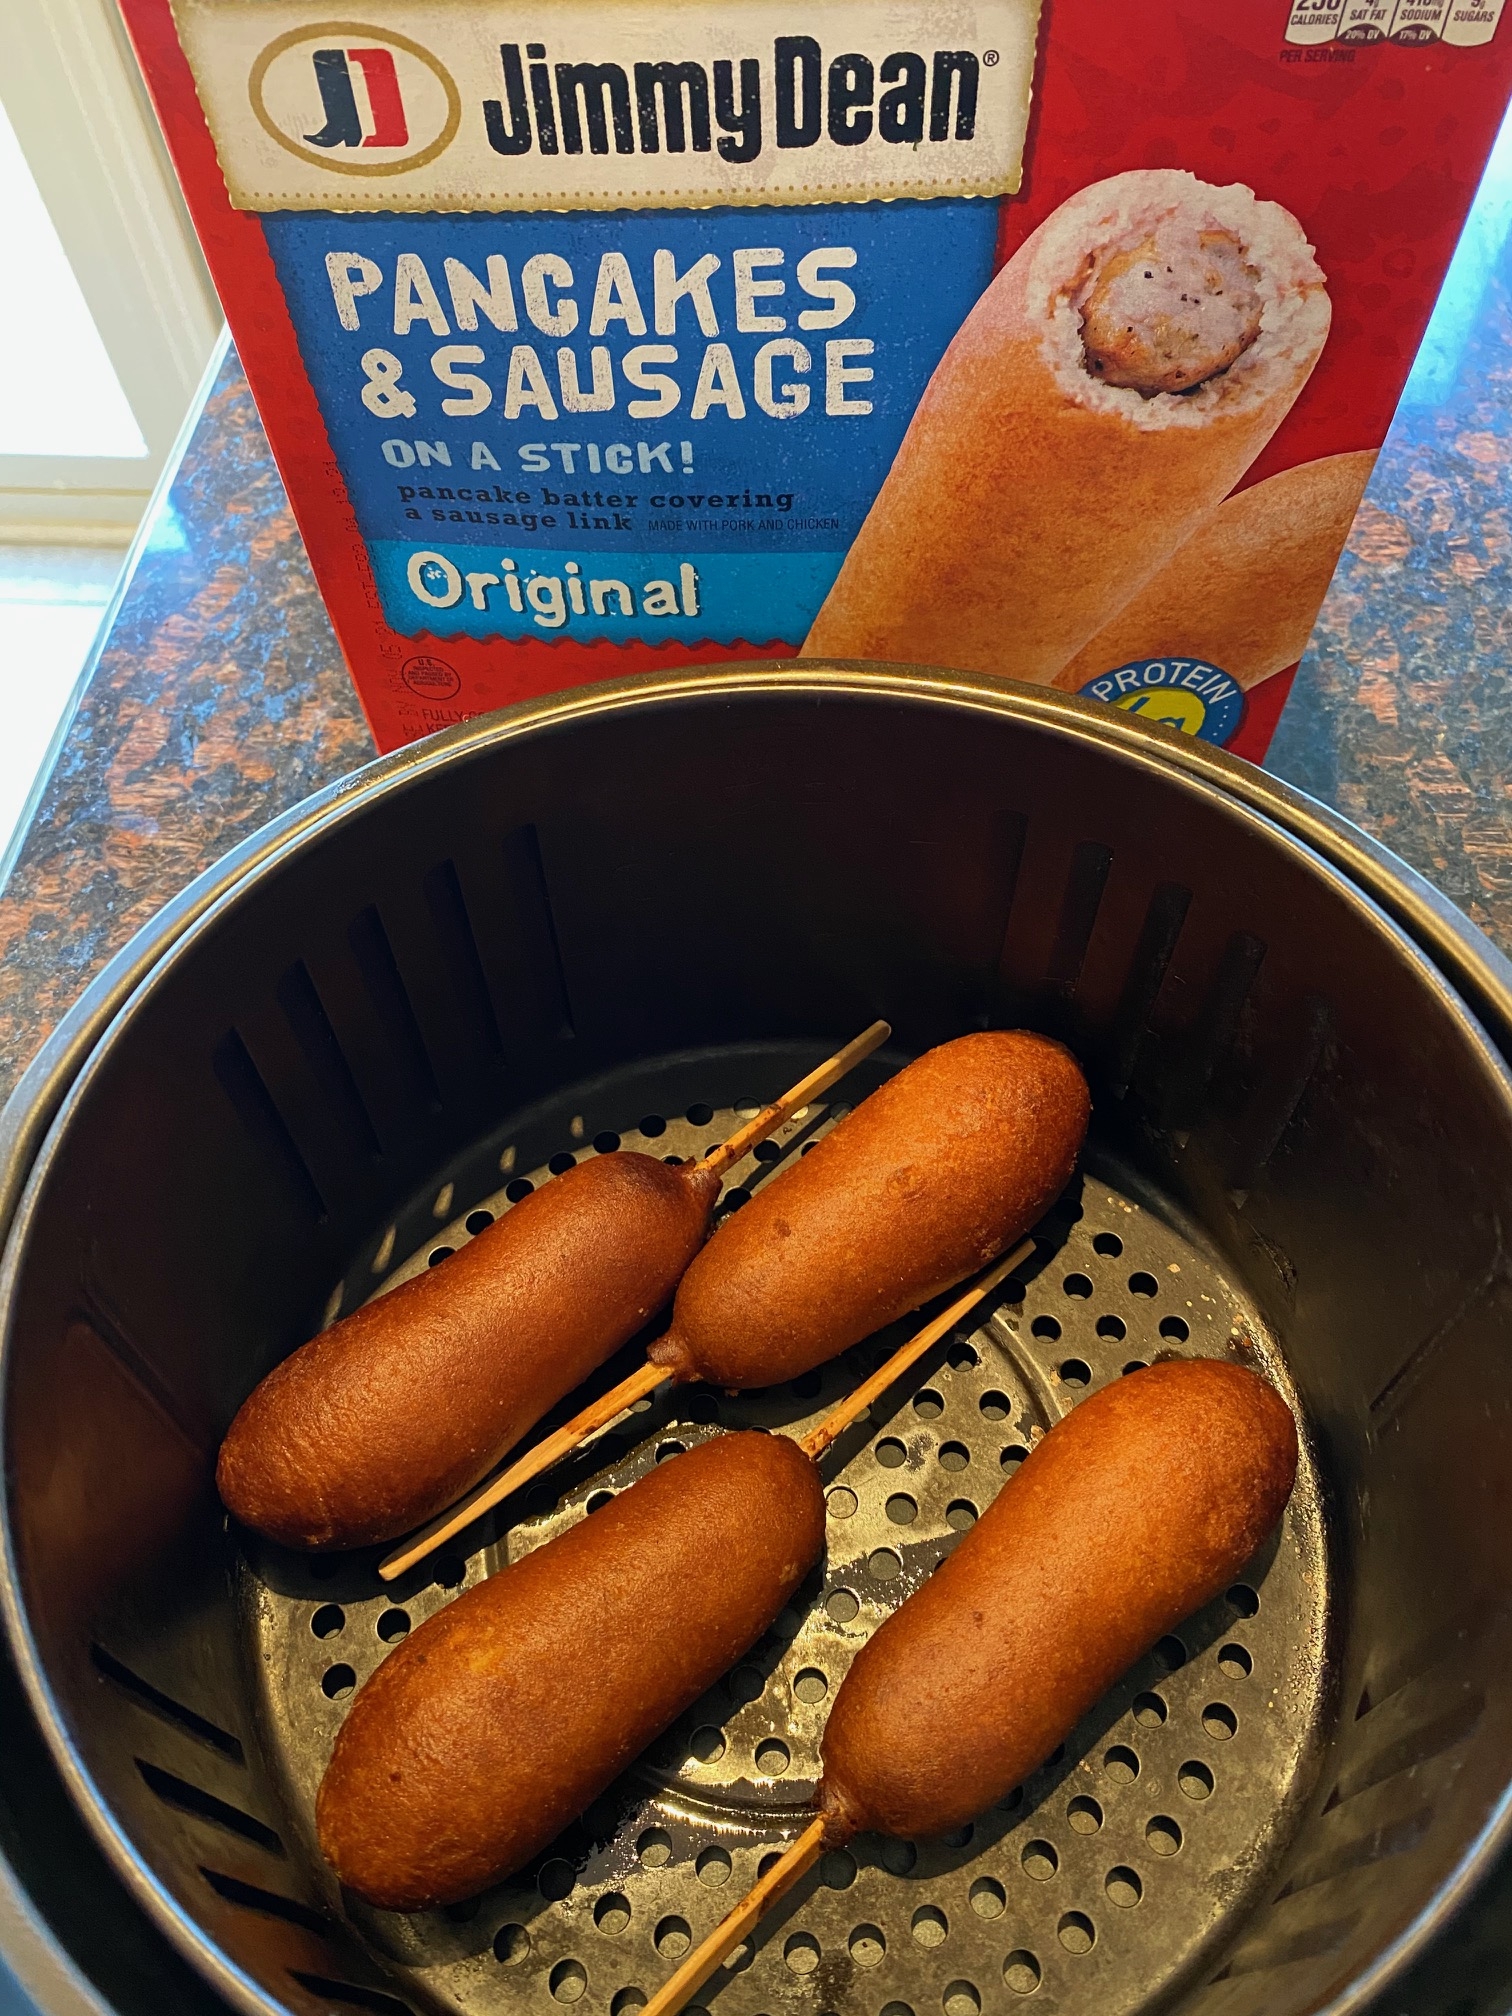 https://www.melaniecooks.com/wp-content/uploads/2021/10/Air-fryer-pancake-sausage-on-a-stick-3-rotated.jpg